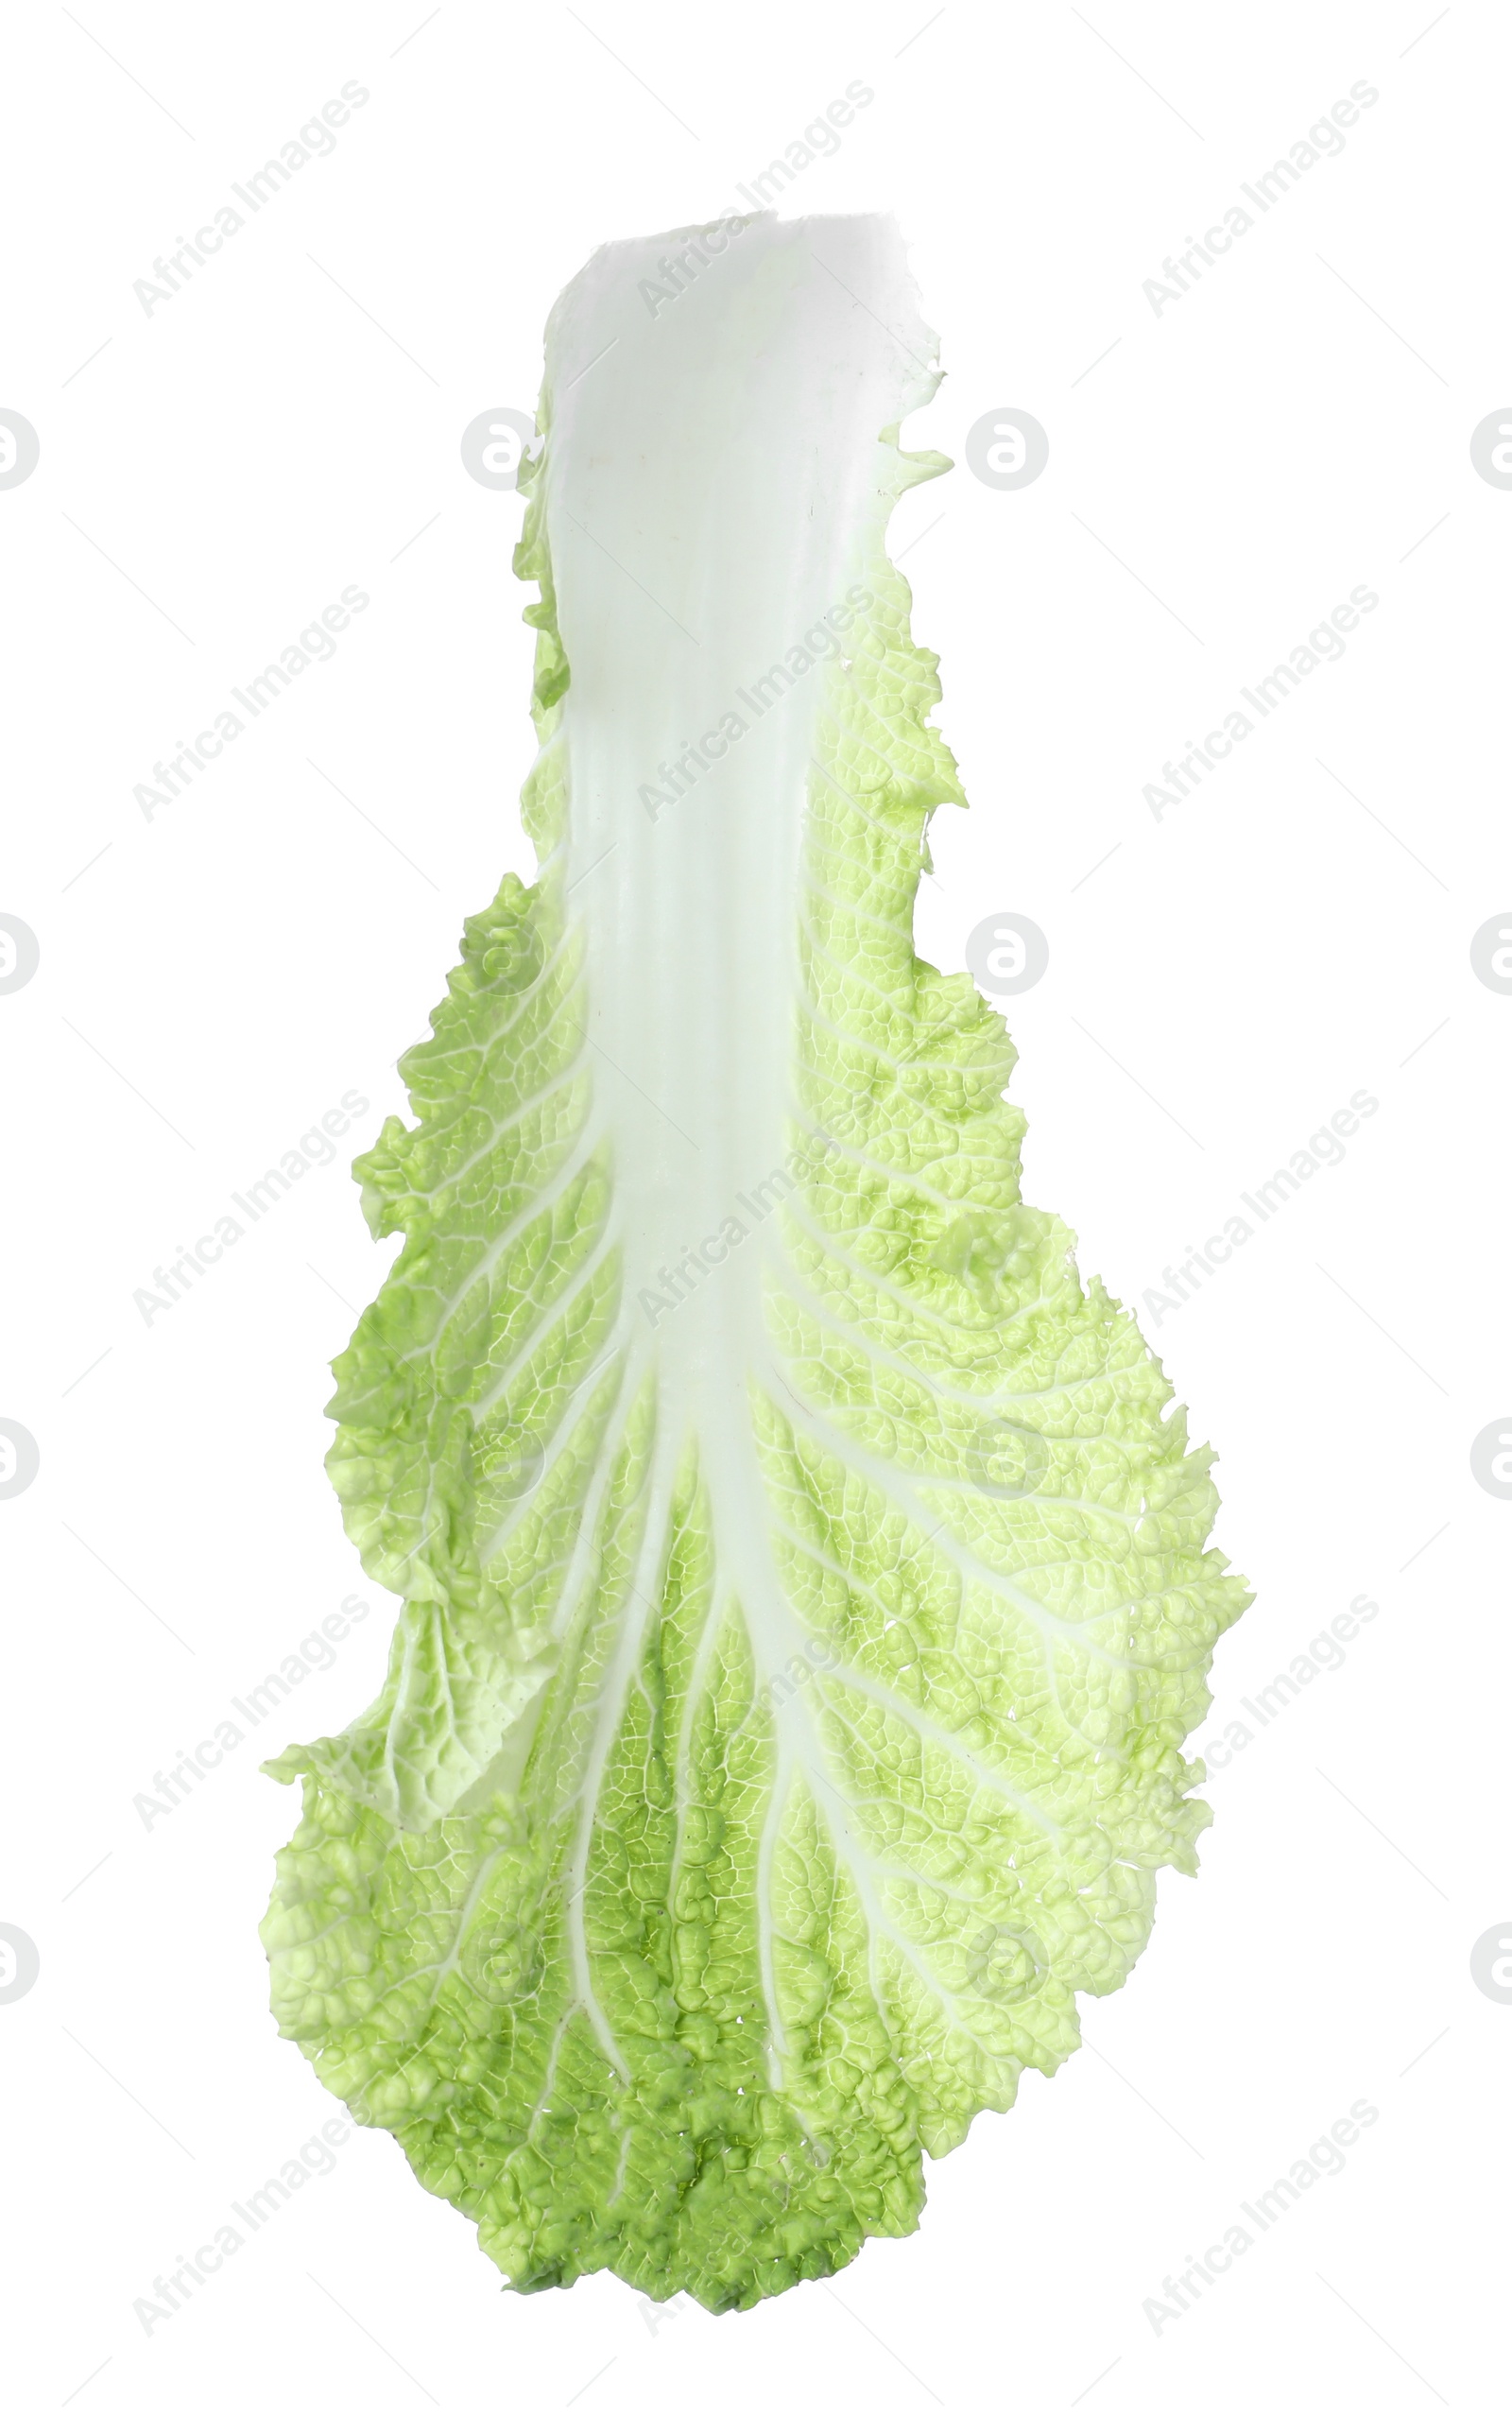 Photo of Fresh Chinese cabbage leaf isolated on white